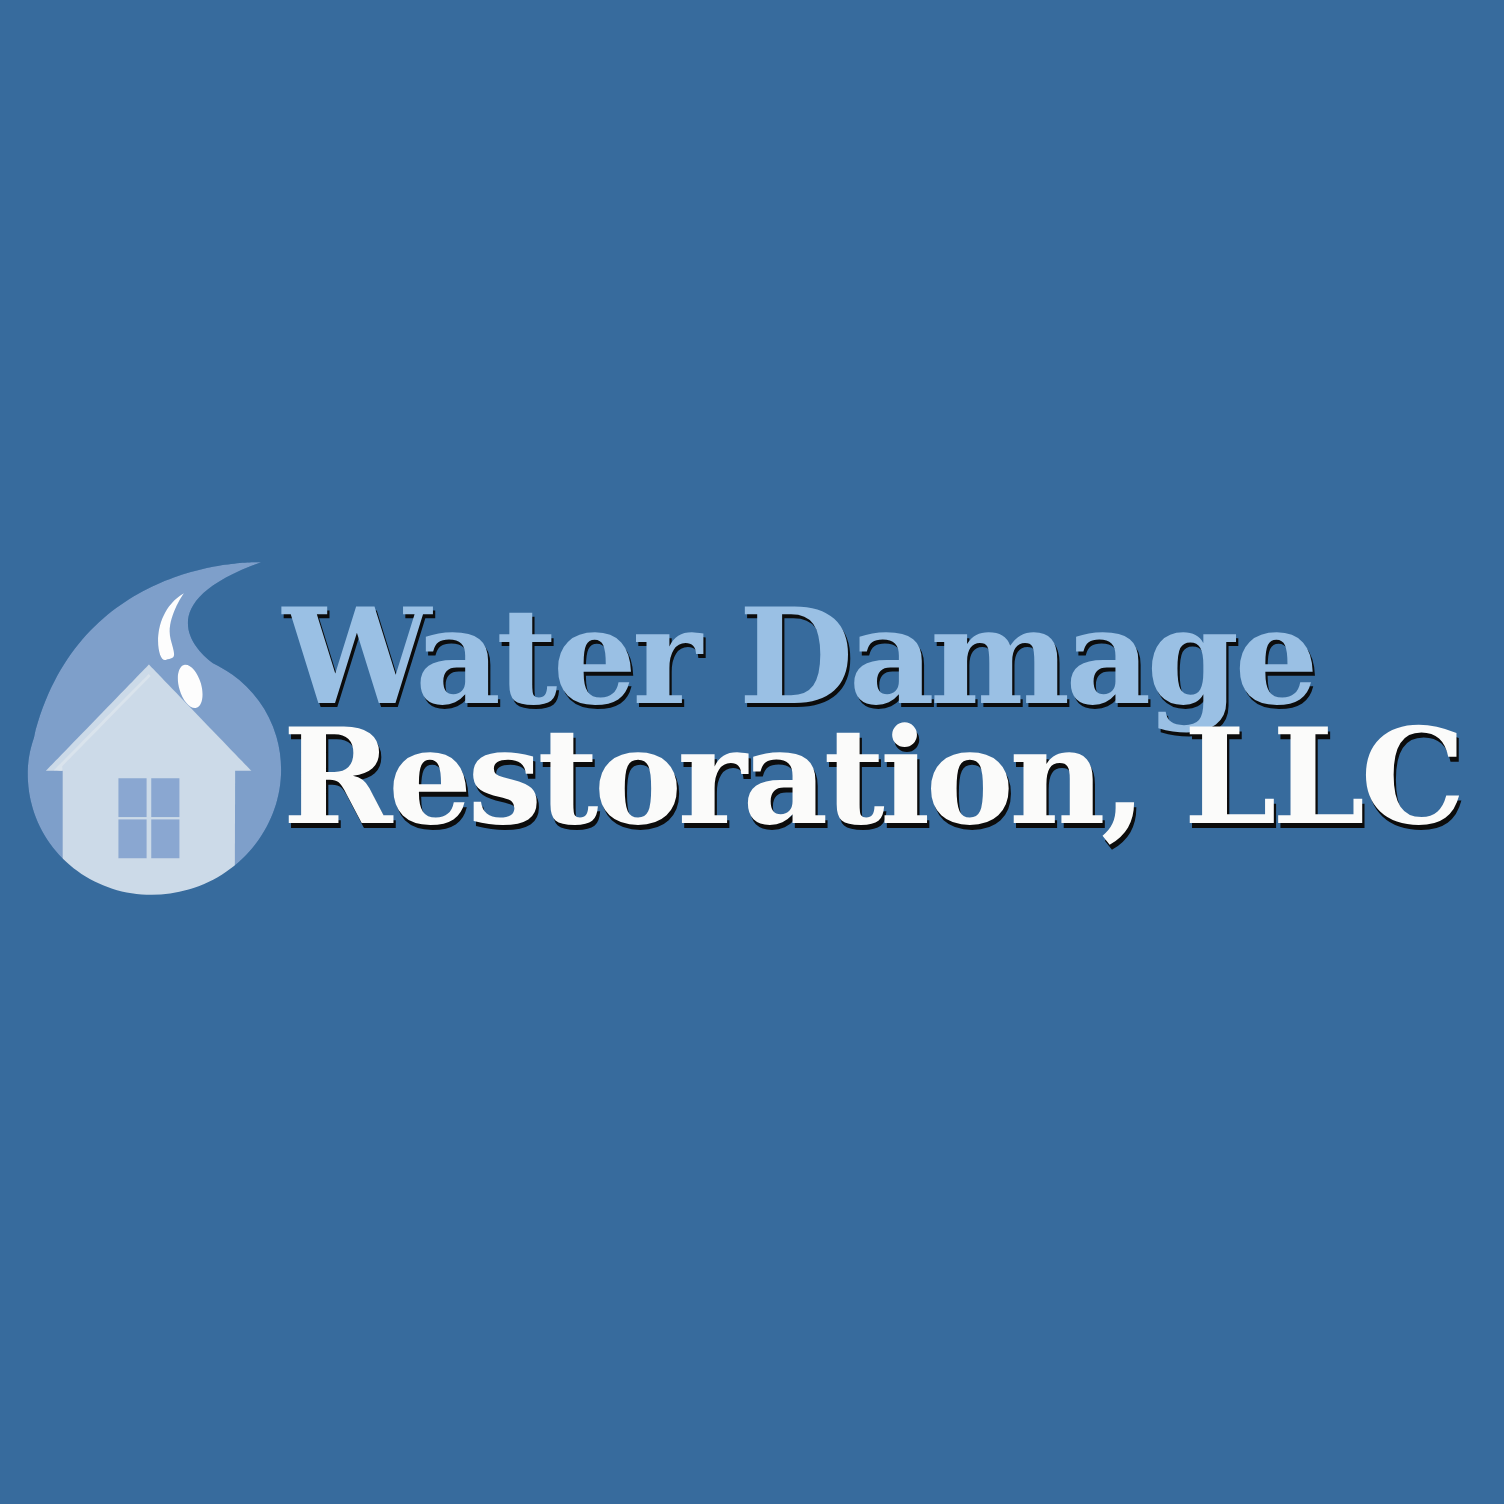 Water Damage Restoration LLC - Middle River, MD - (866)201-6230 | ShowMeLocal.com